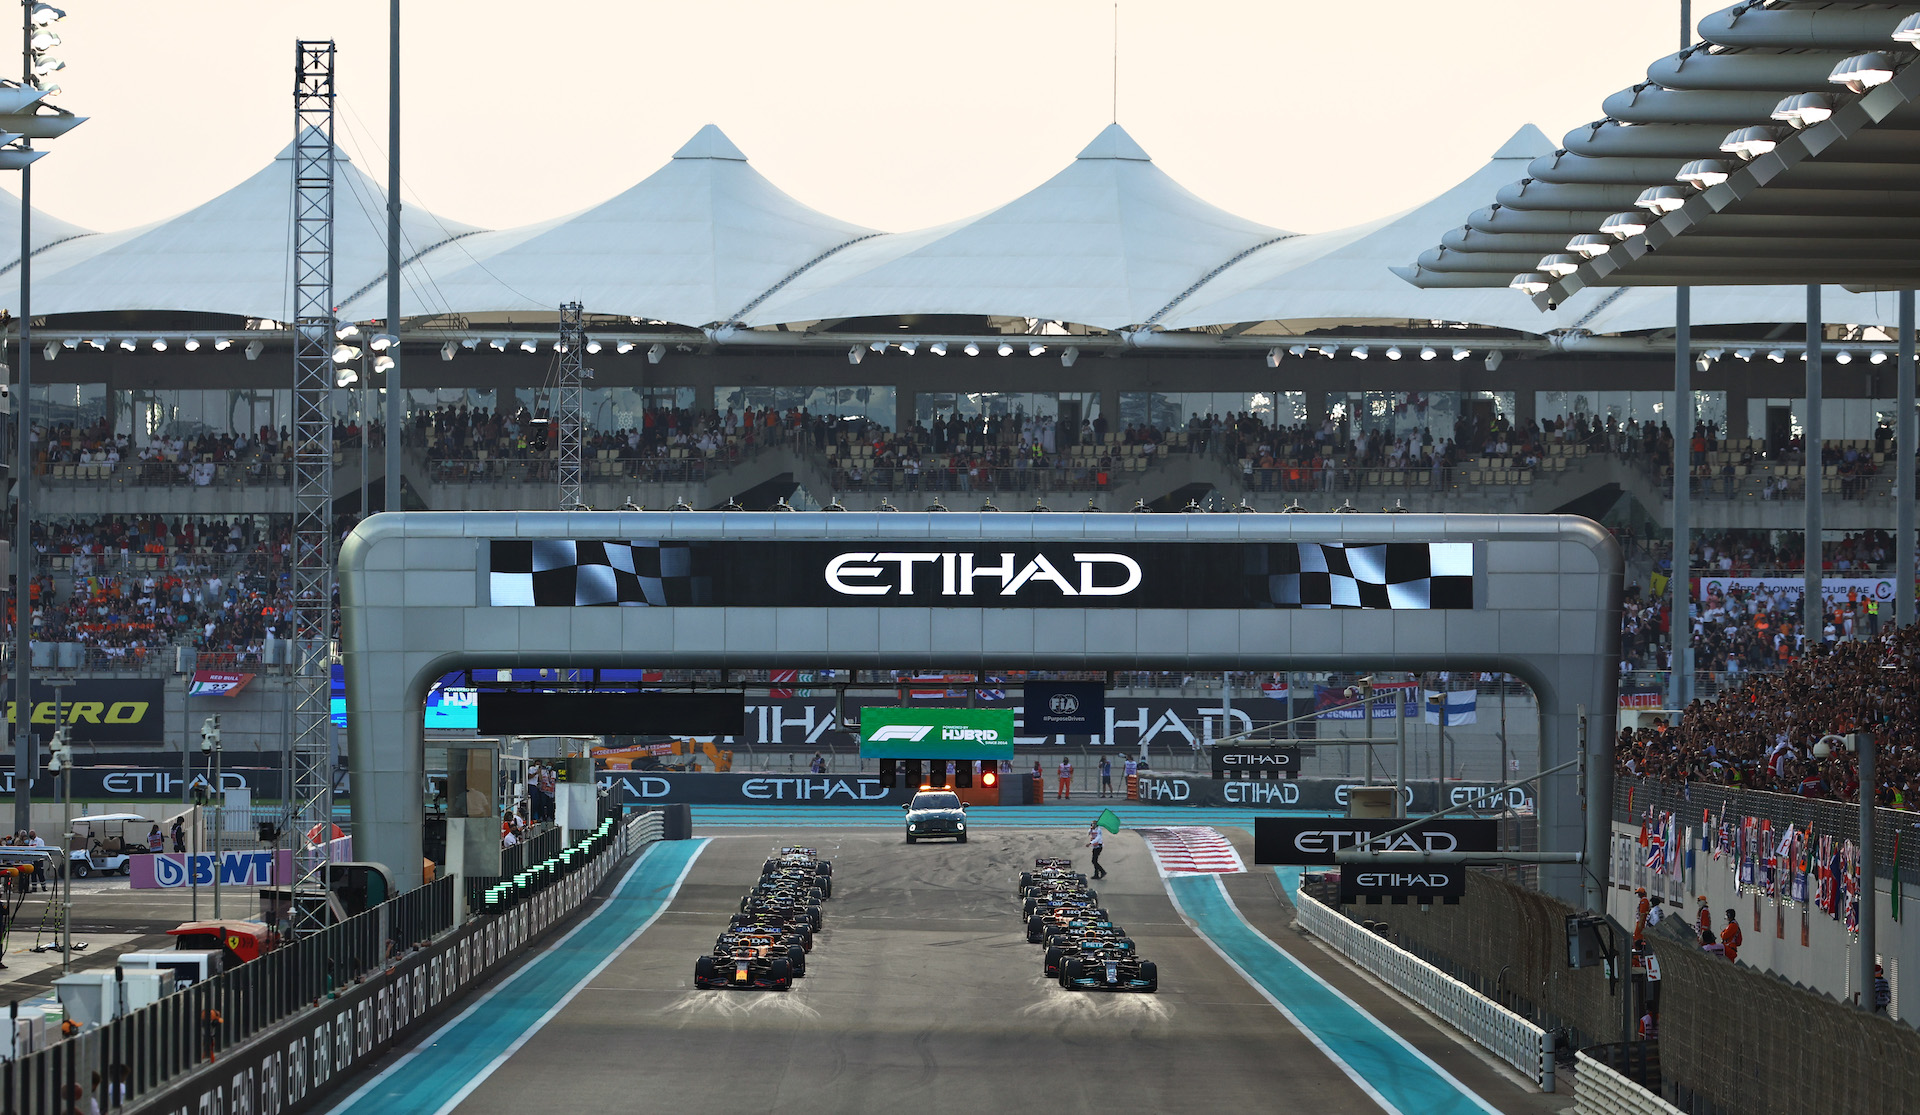 Circuito de Yas Marina, GP Abu Dhabi, F1